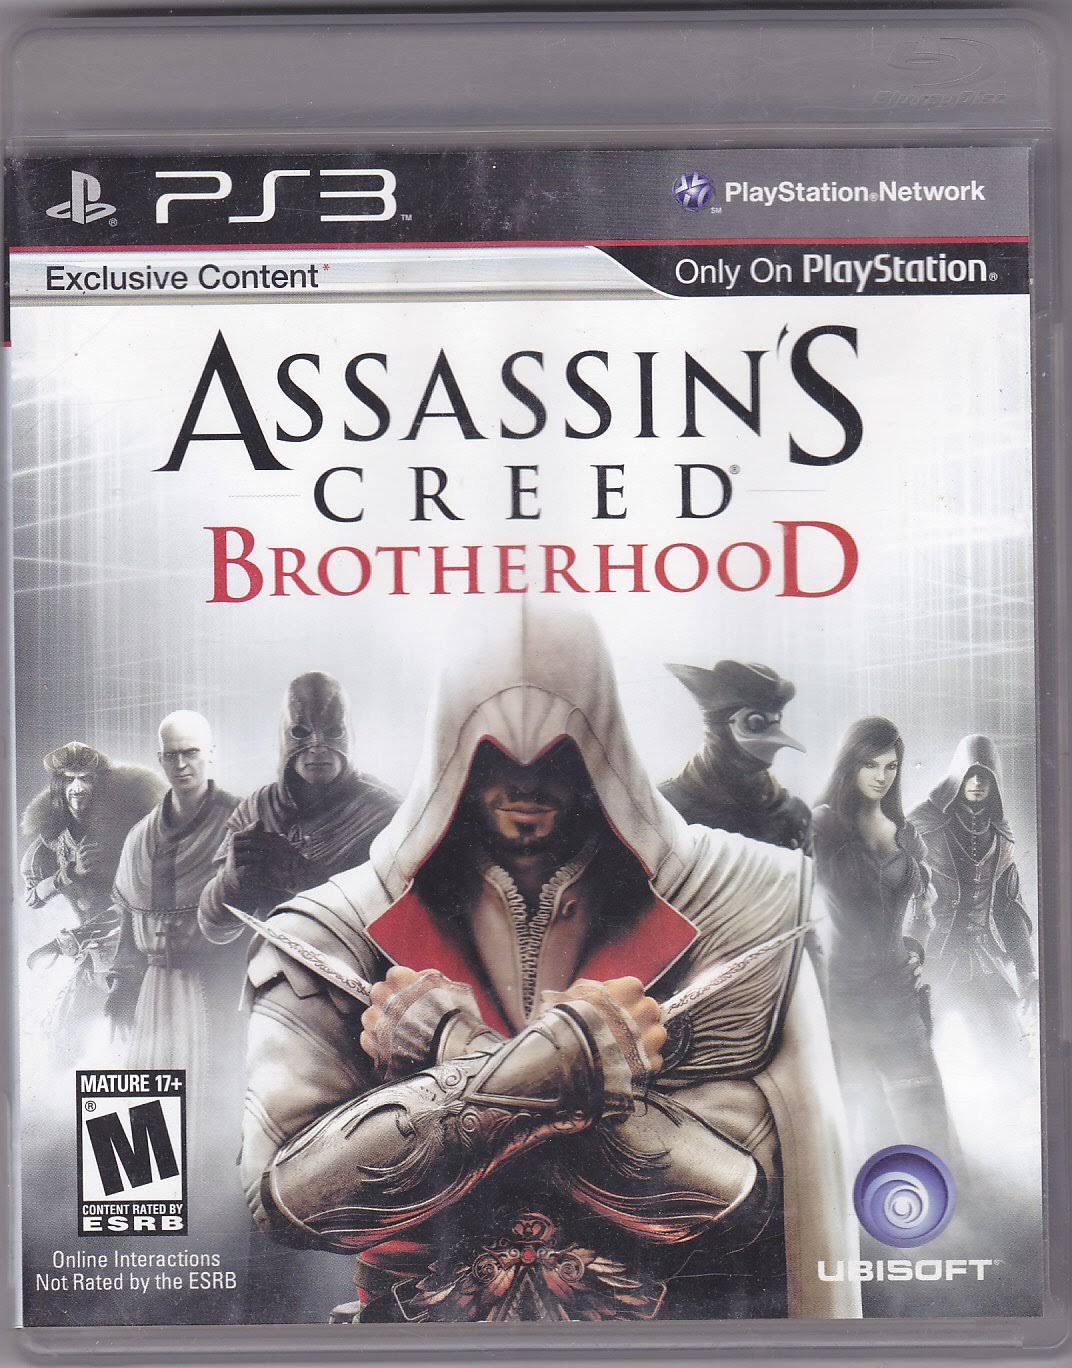 Assassin's Creed: Brotherhood - PlayStation 3